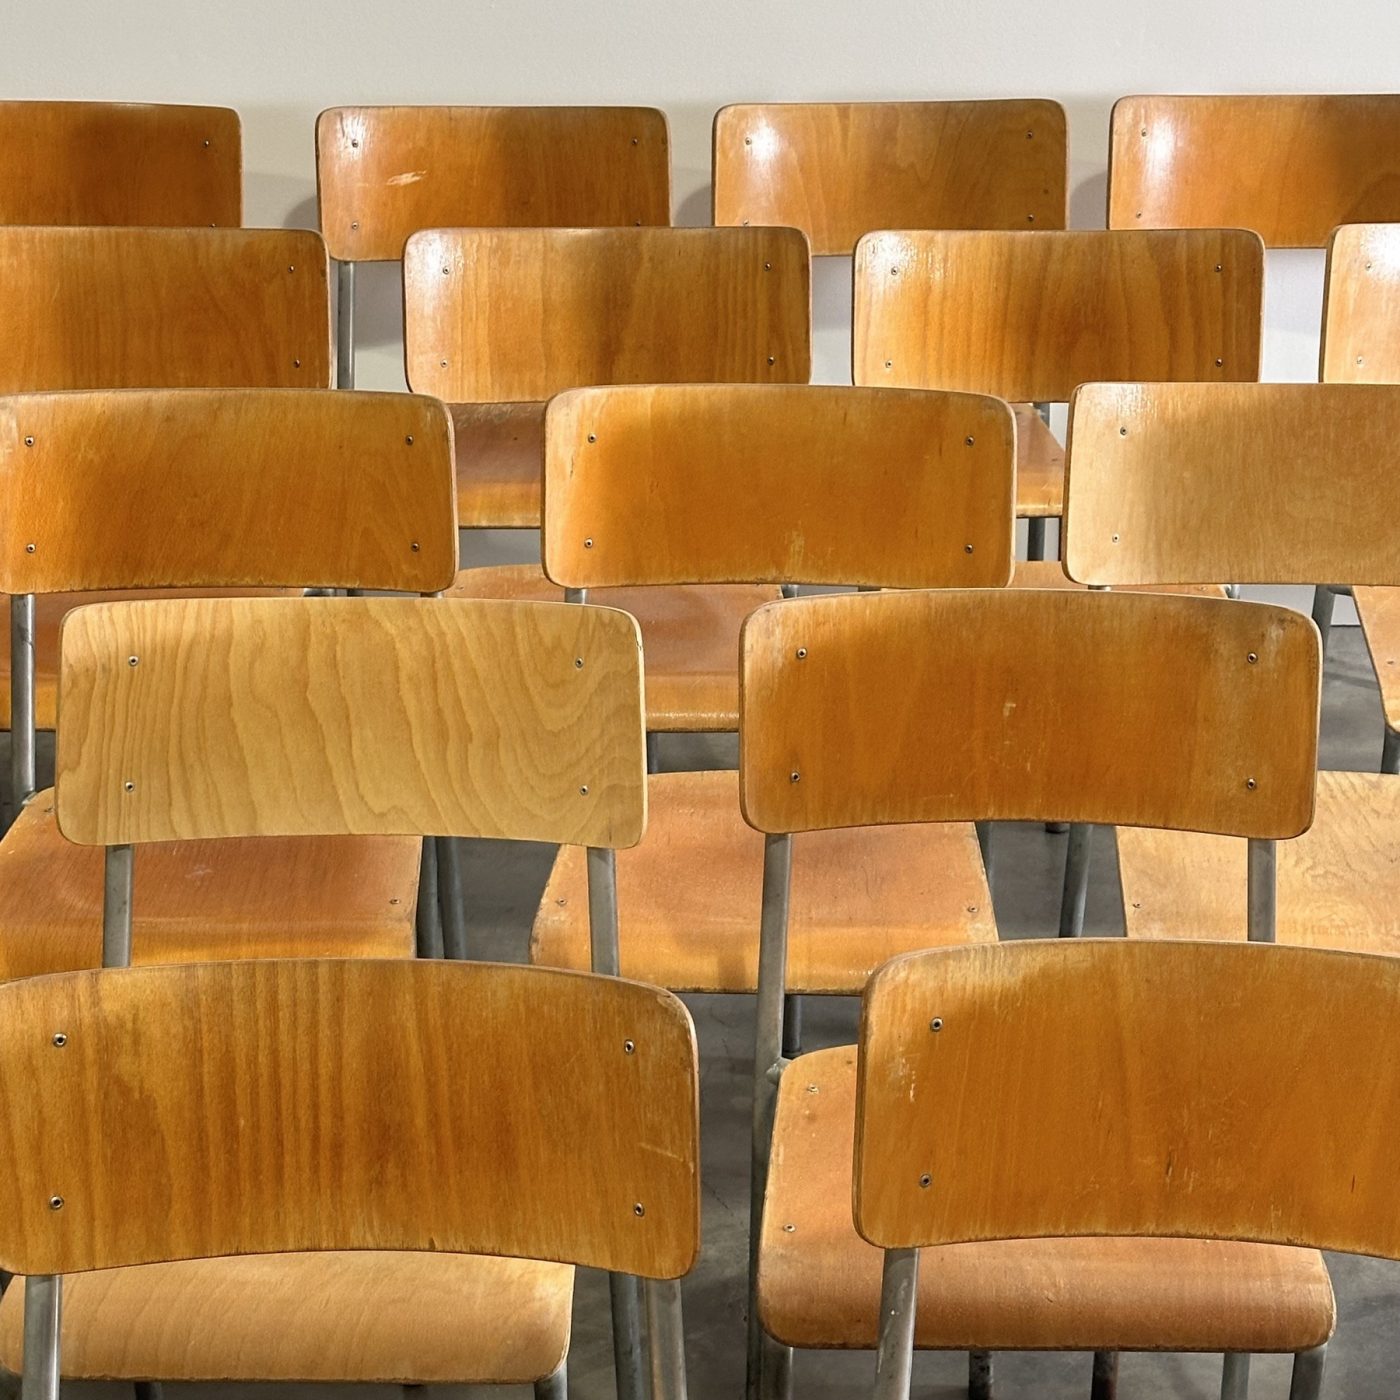 objet-vagabond-school-chairs0001